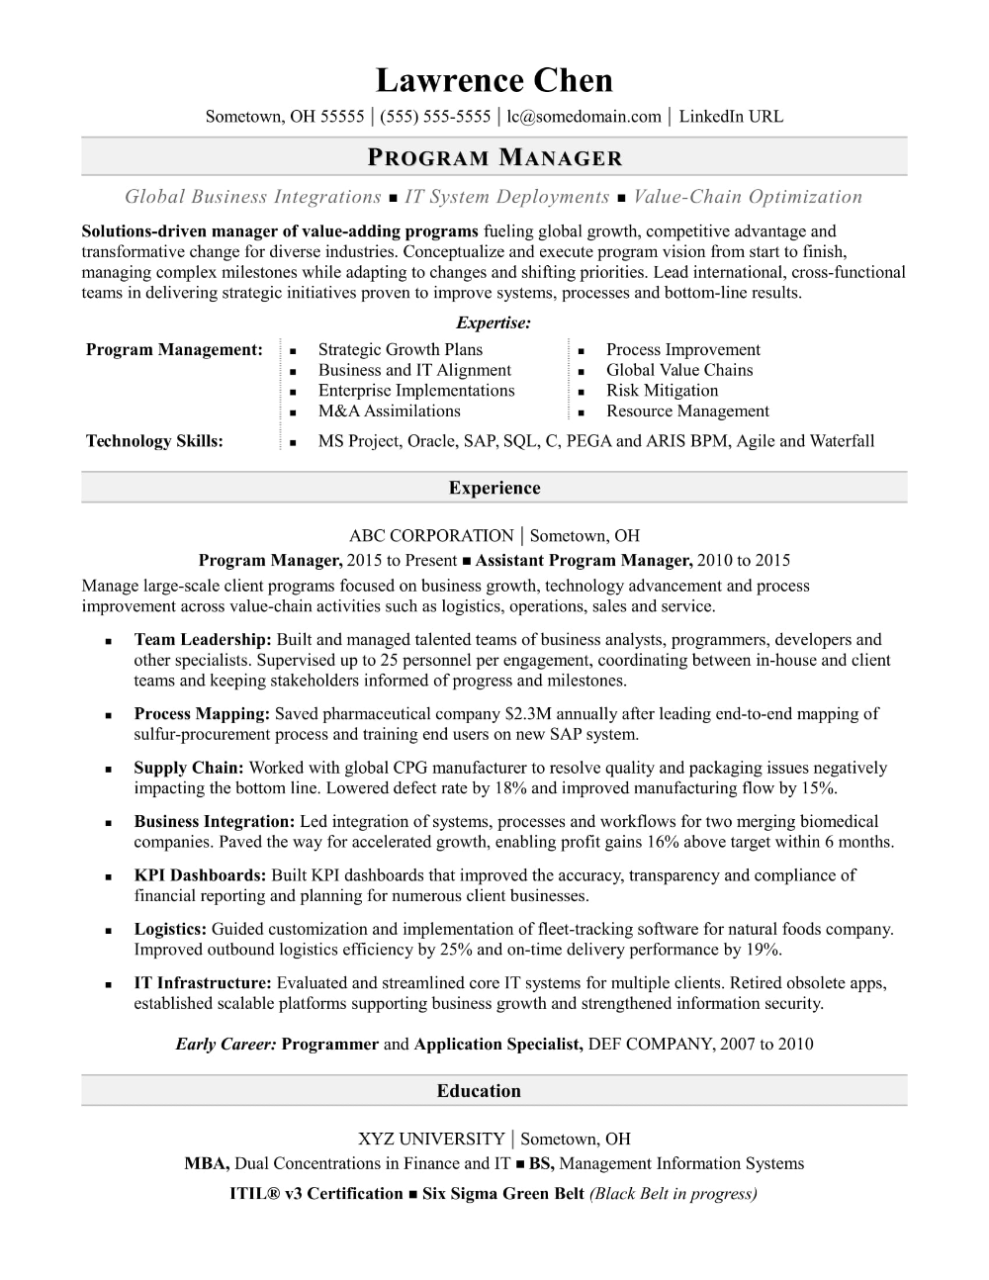 Program Manager Resume Linkedin